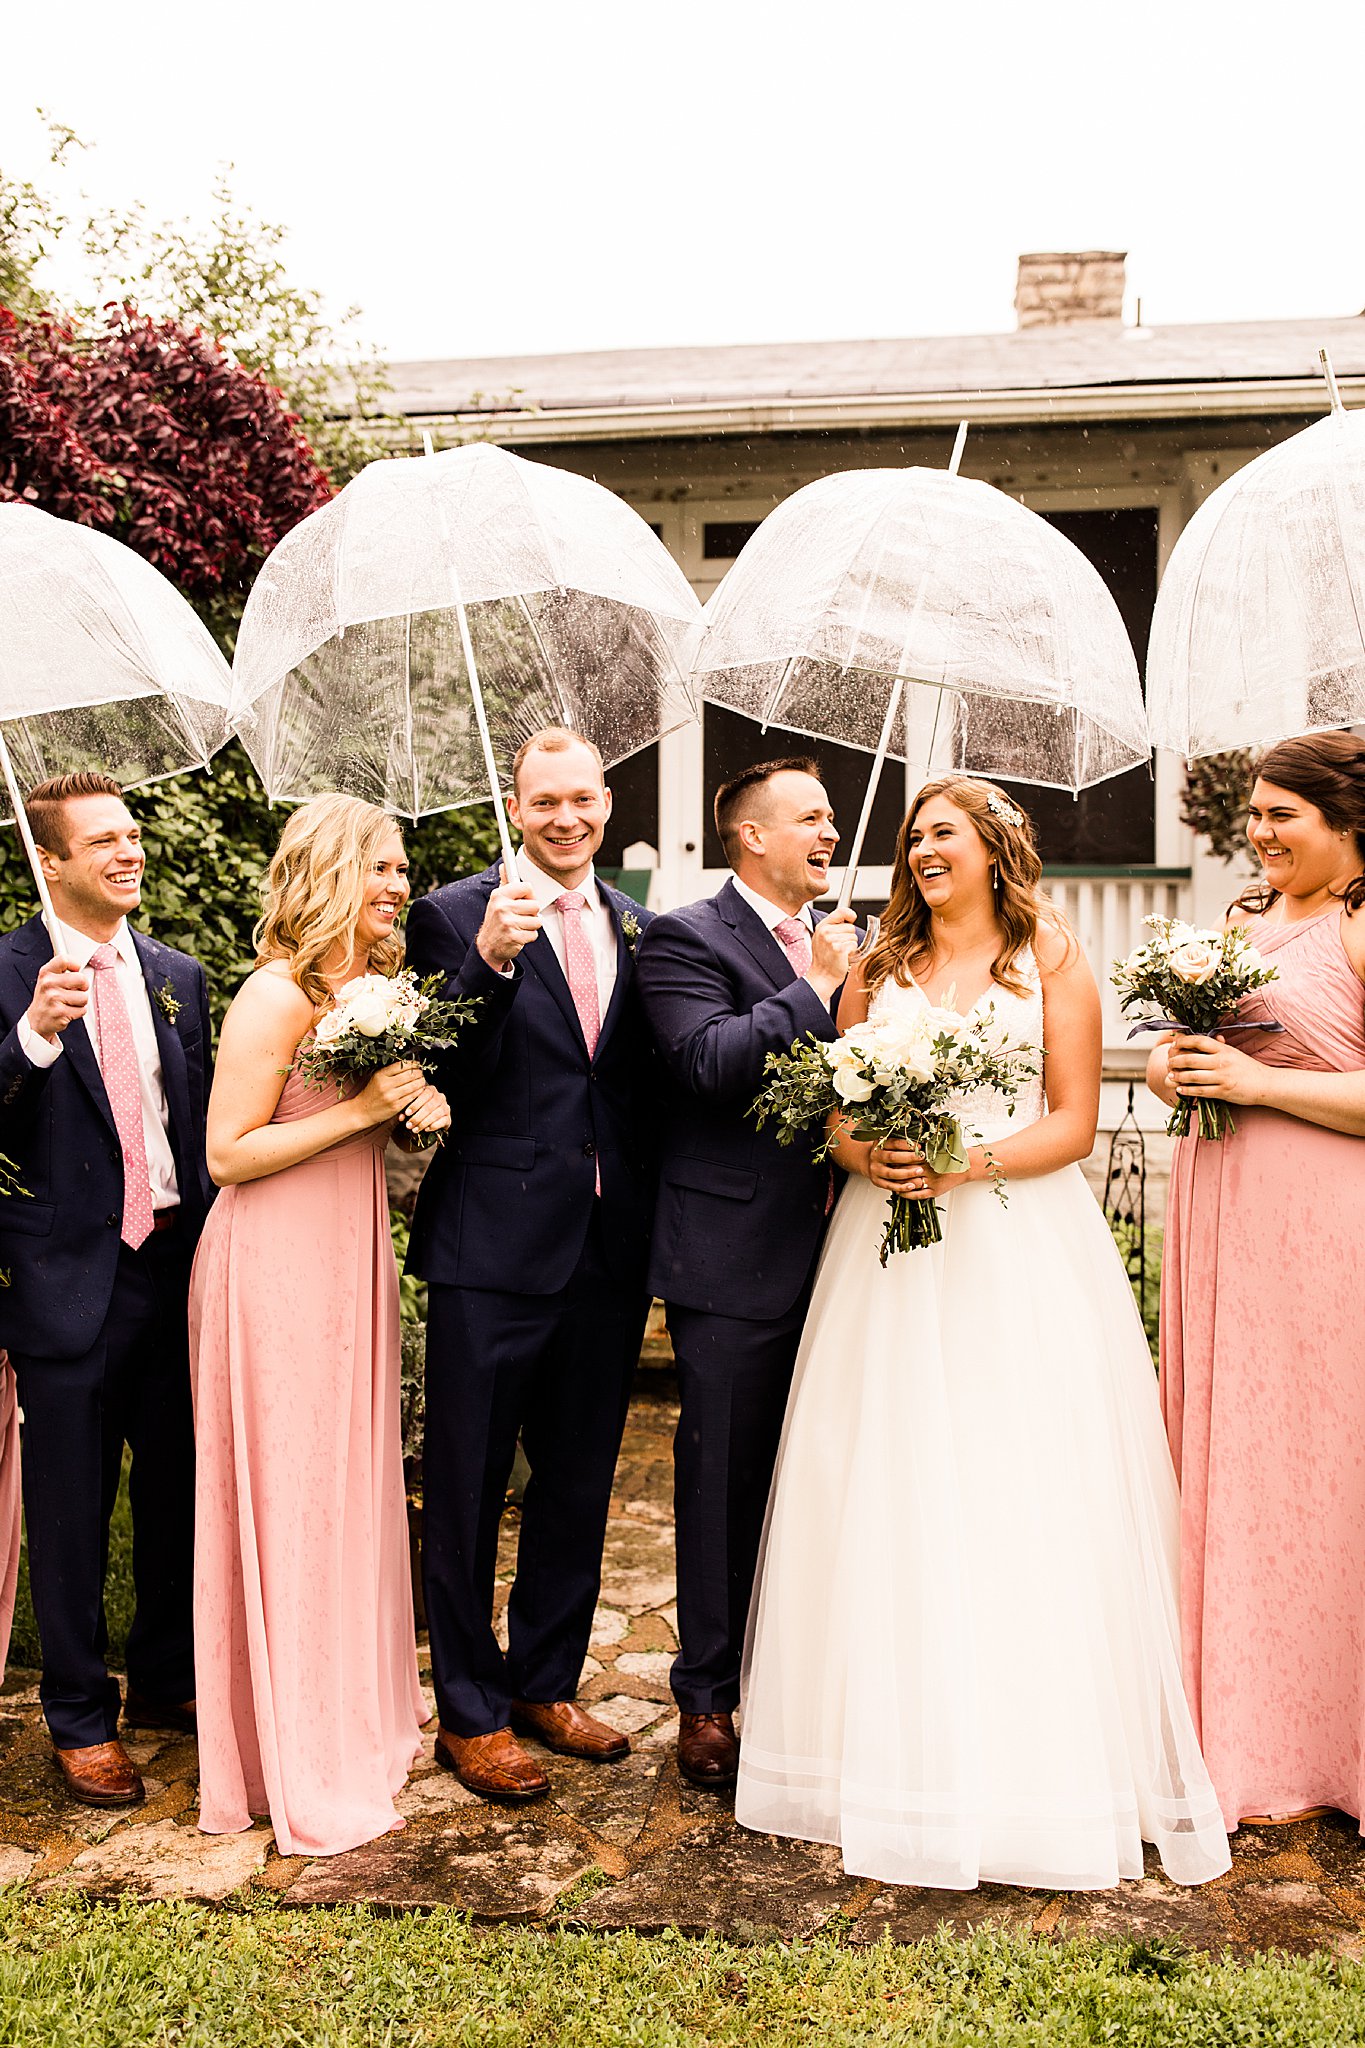 Rainy St. Louis Wedding